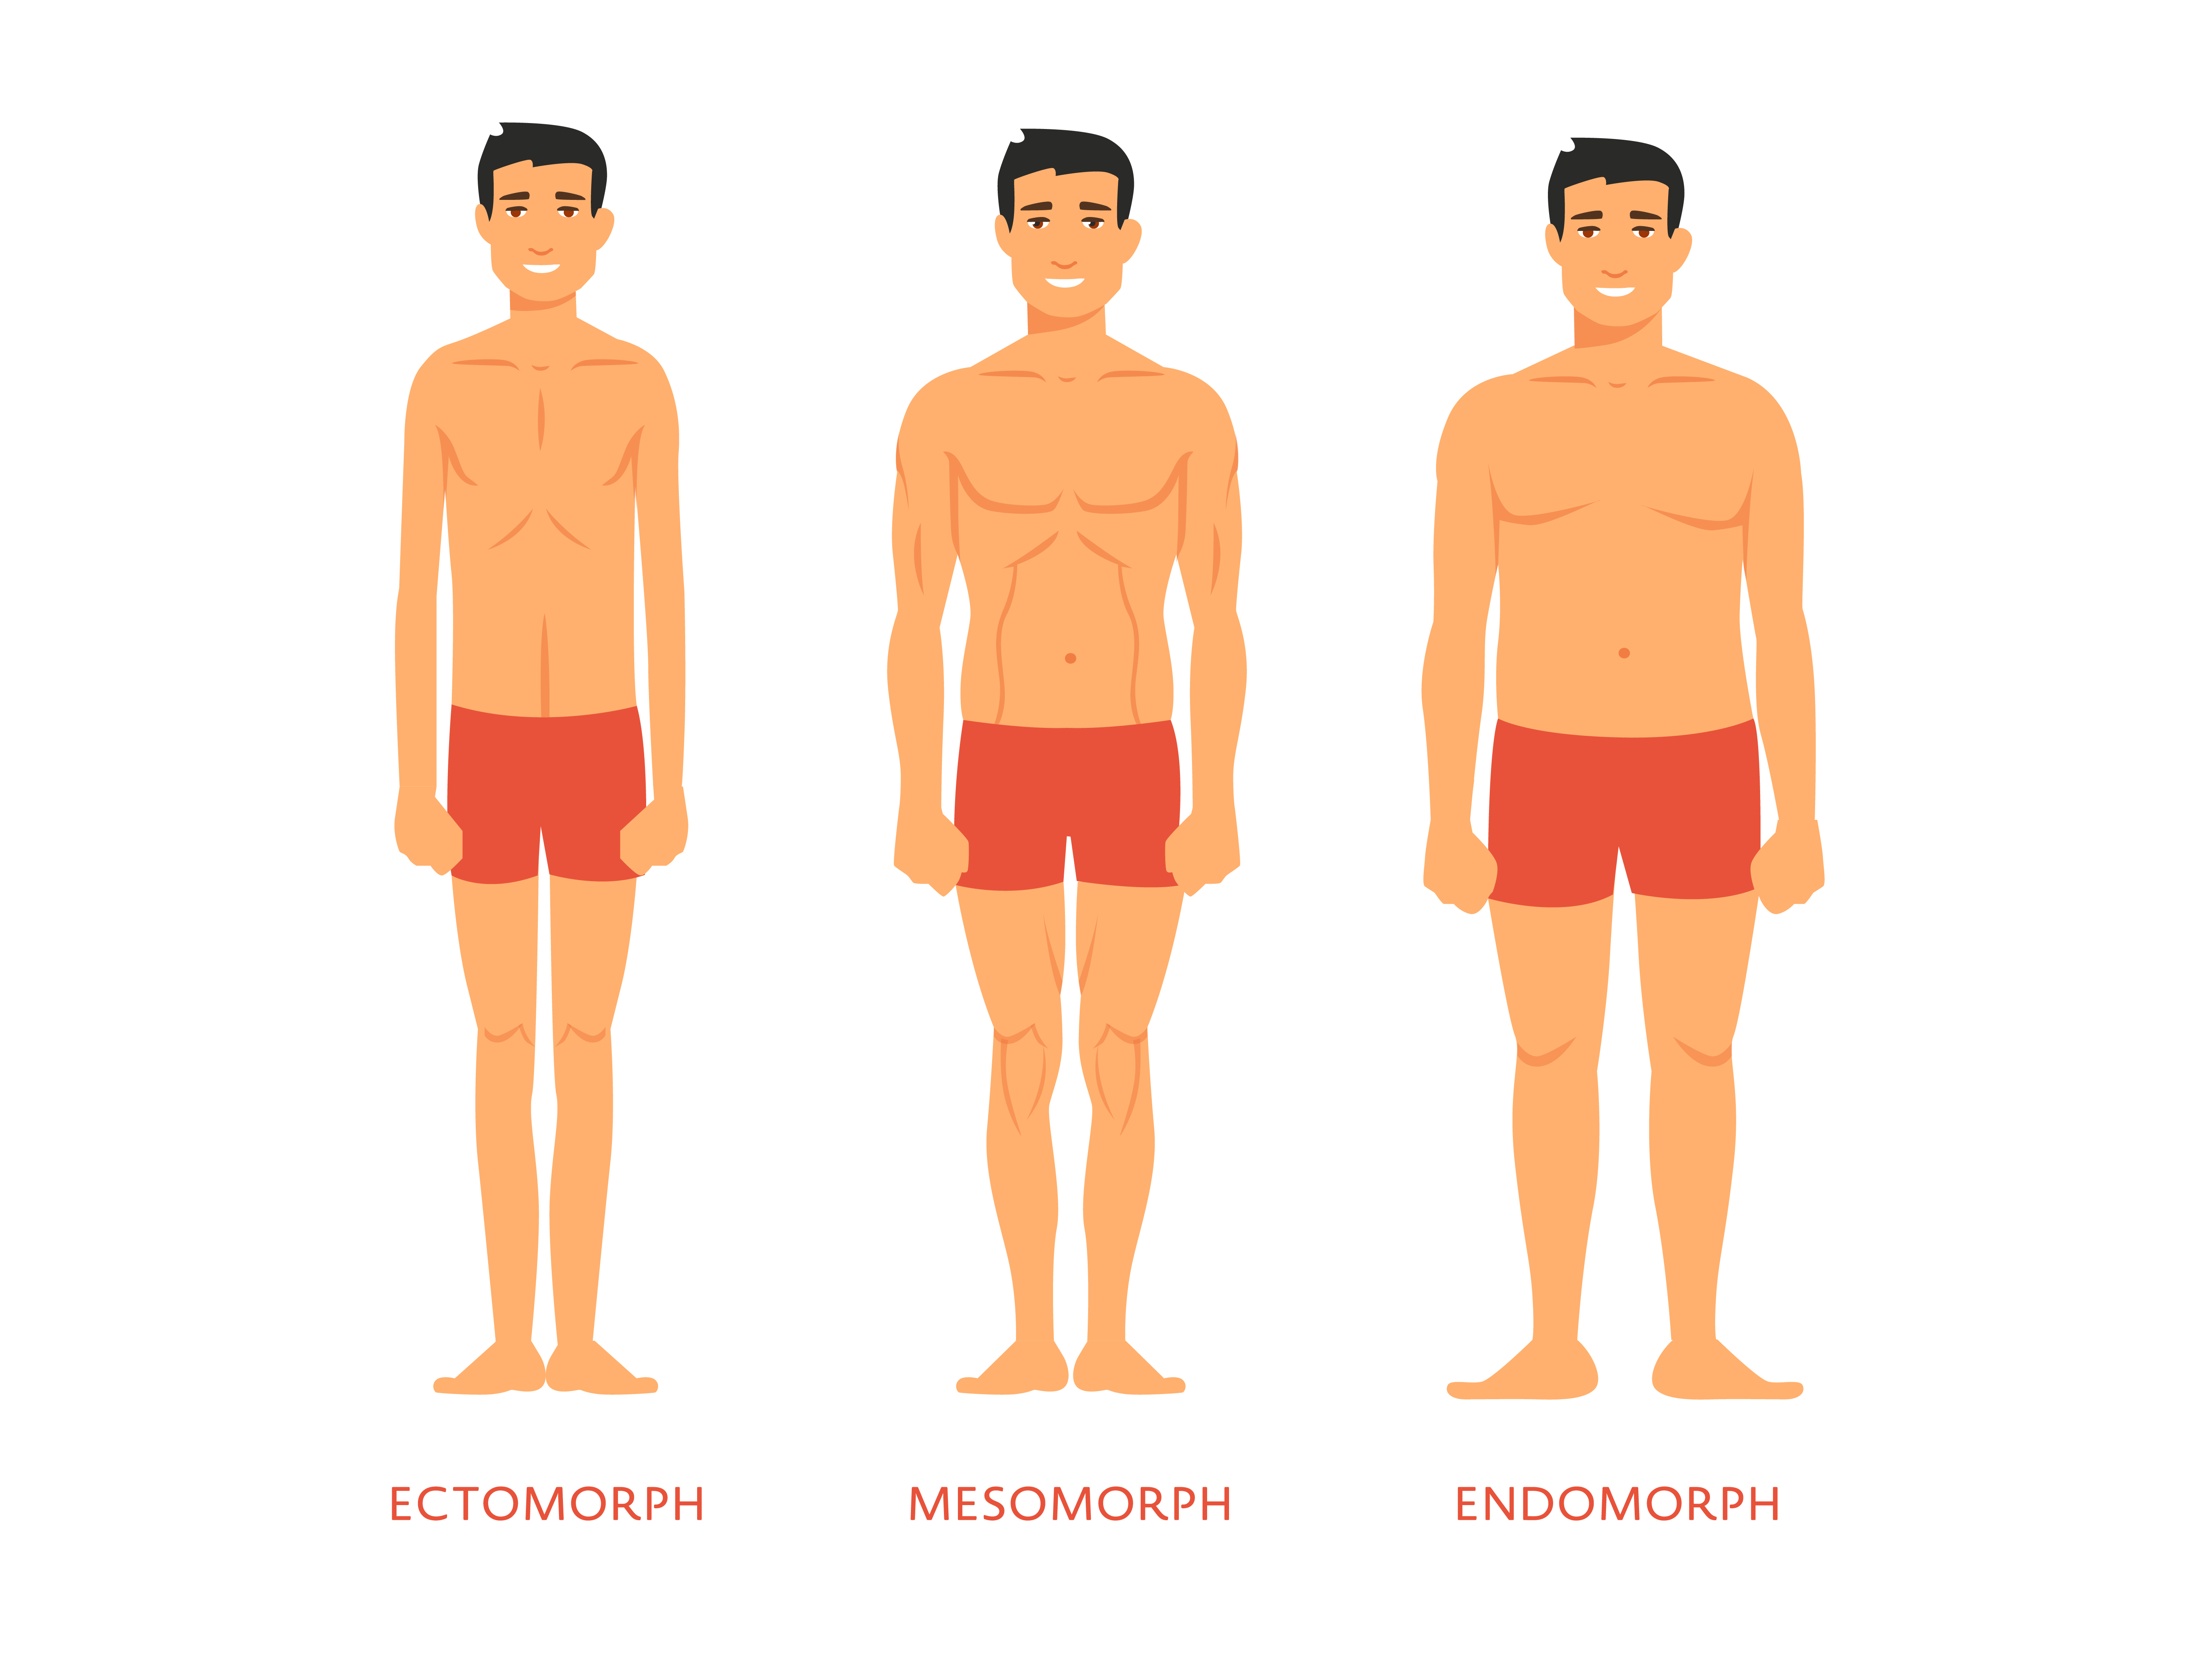 Ectomorph Body Type Explained Description And Characteristics